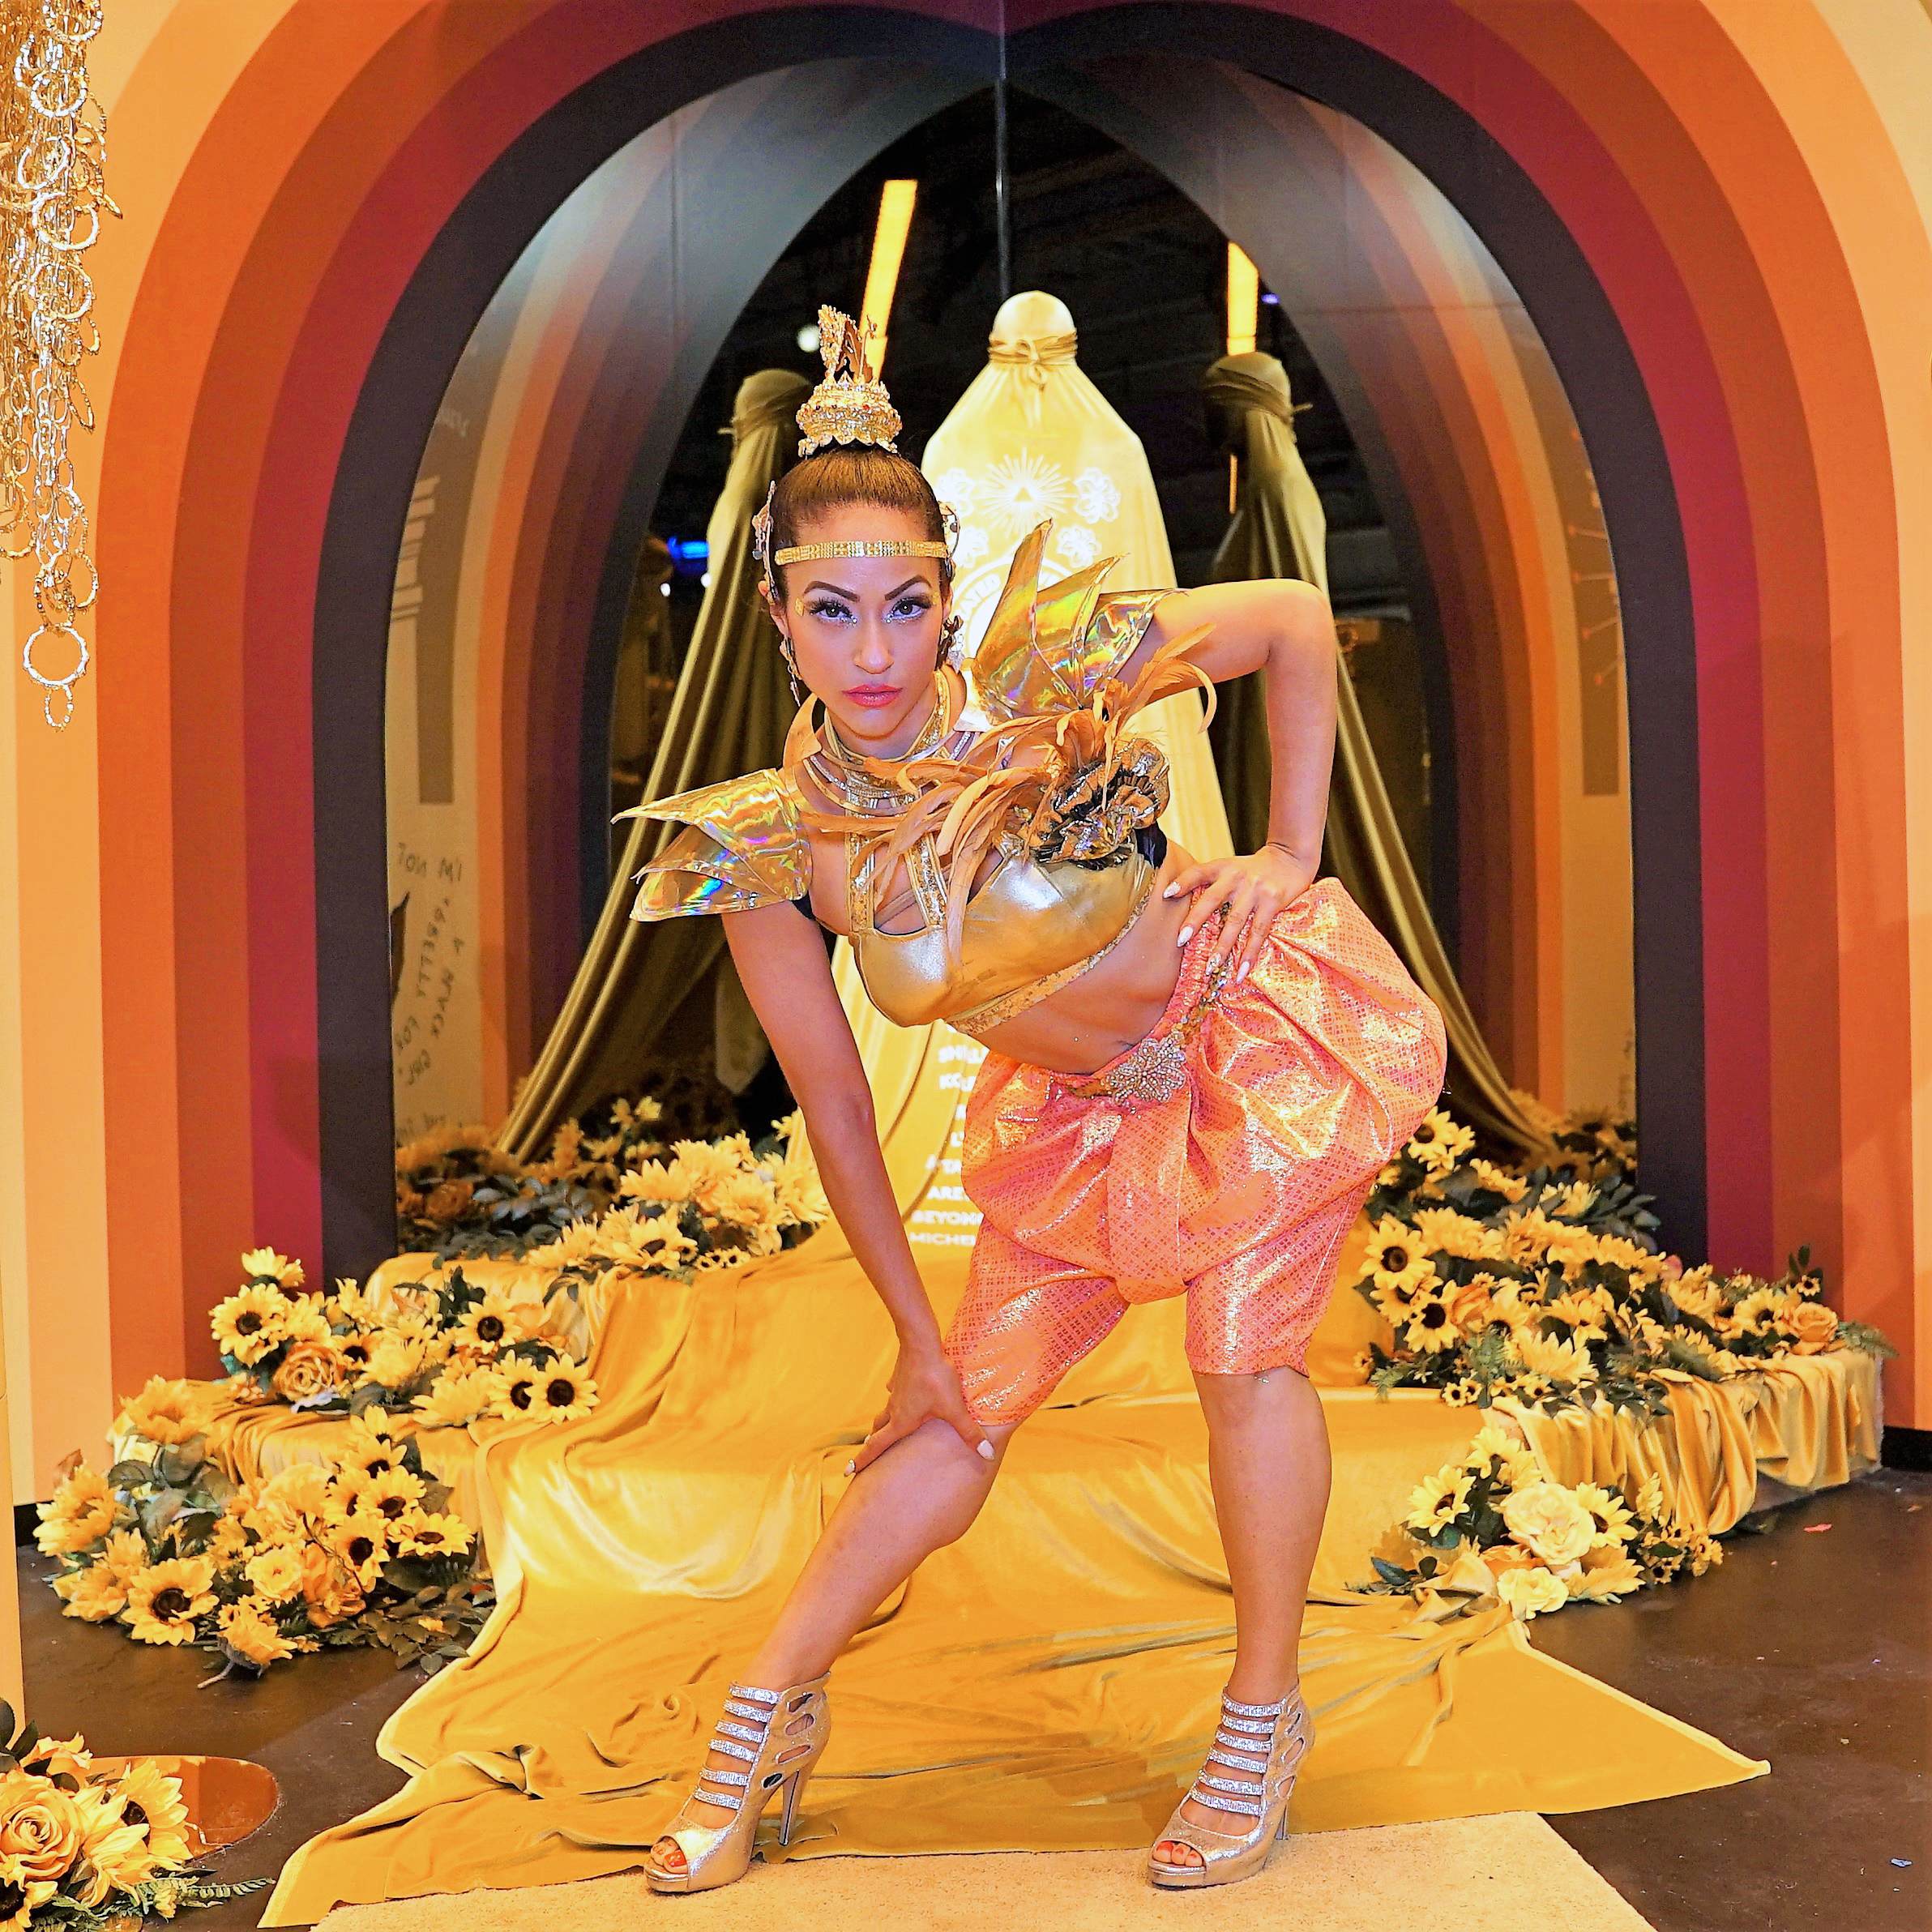 female dancer wearing shiny gold costume